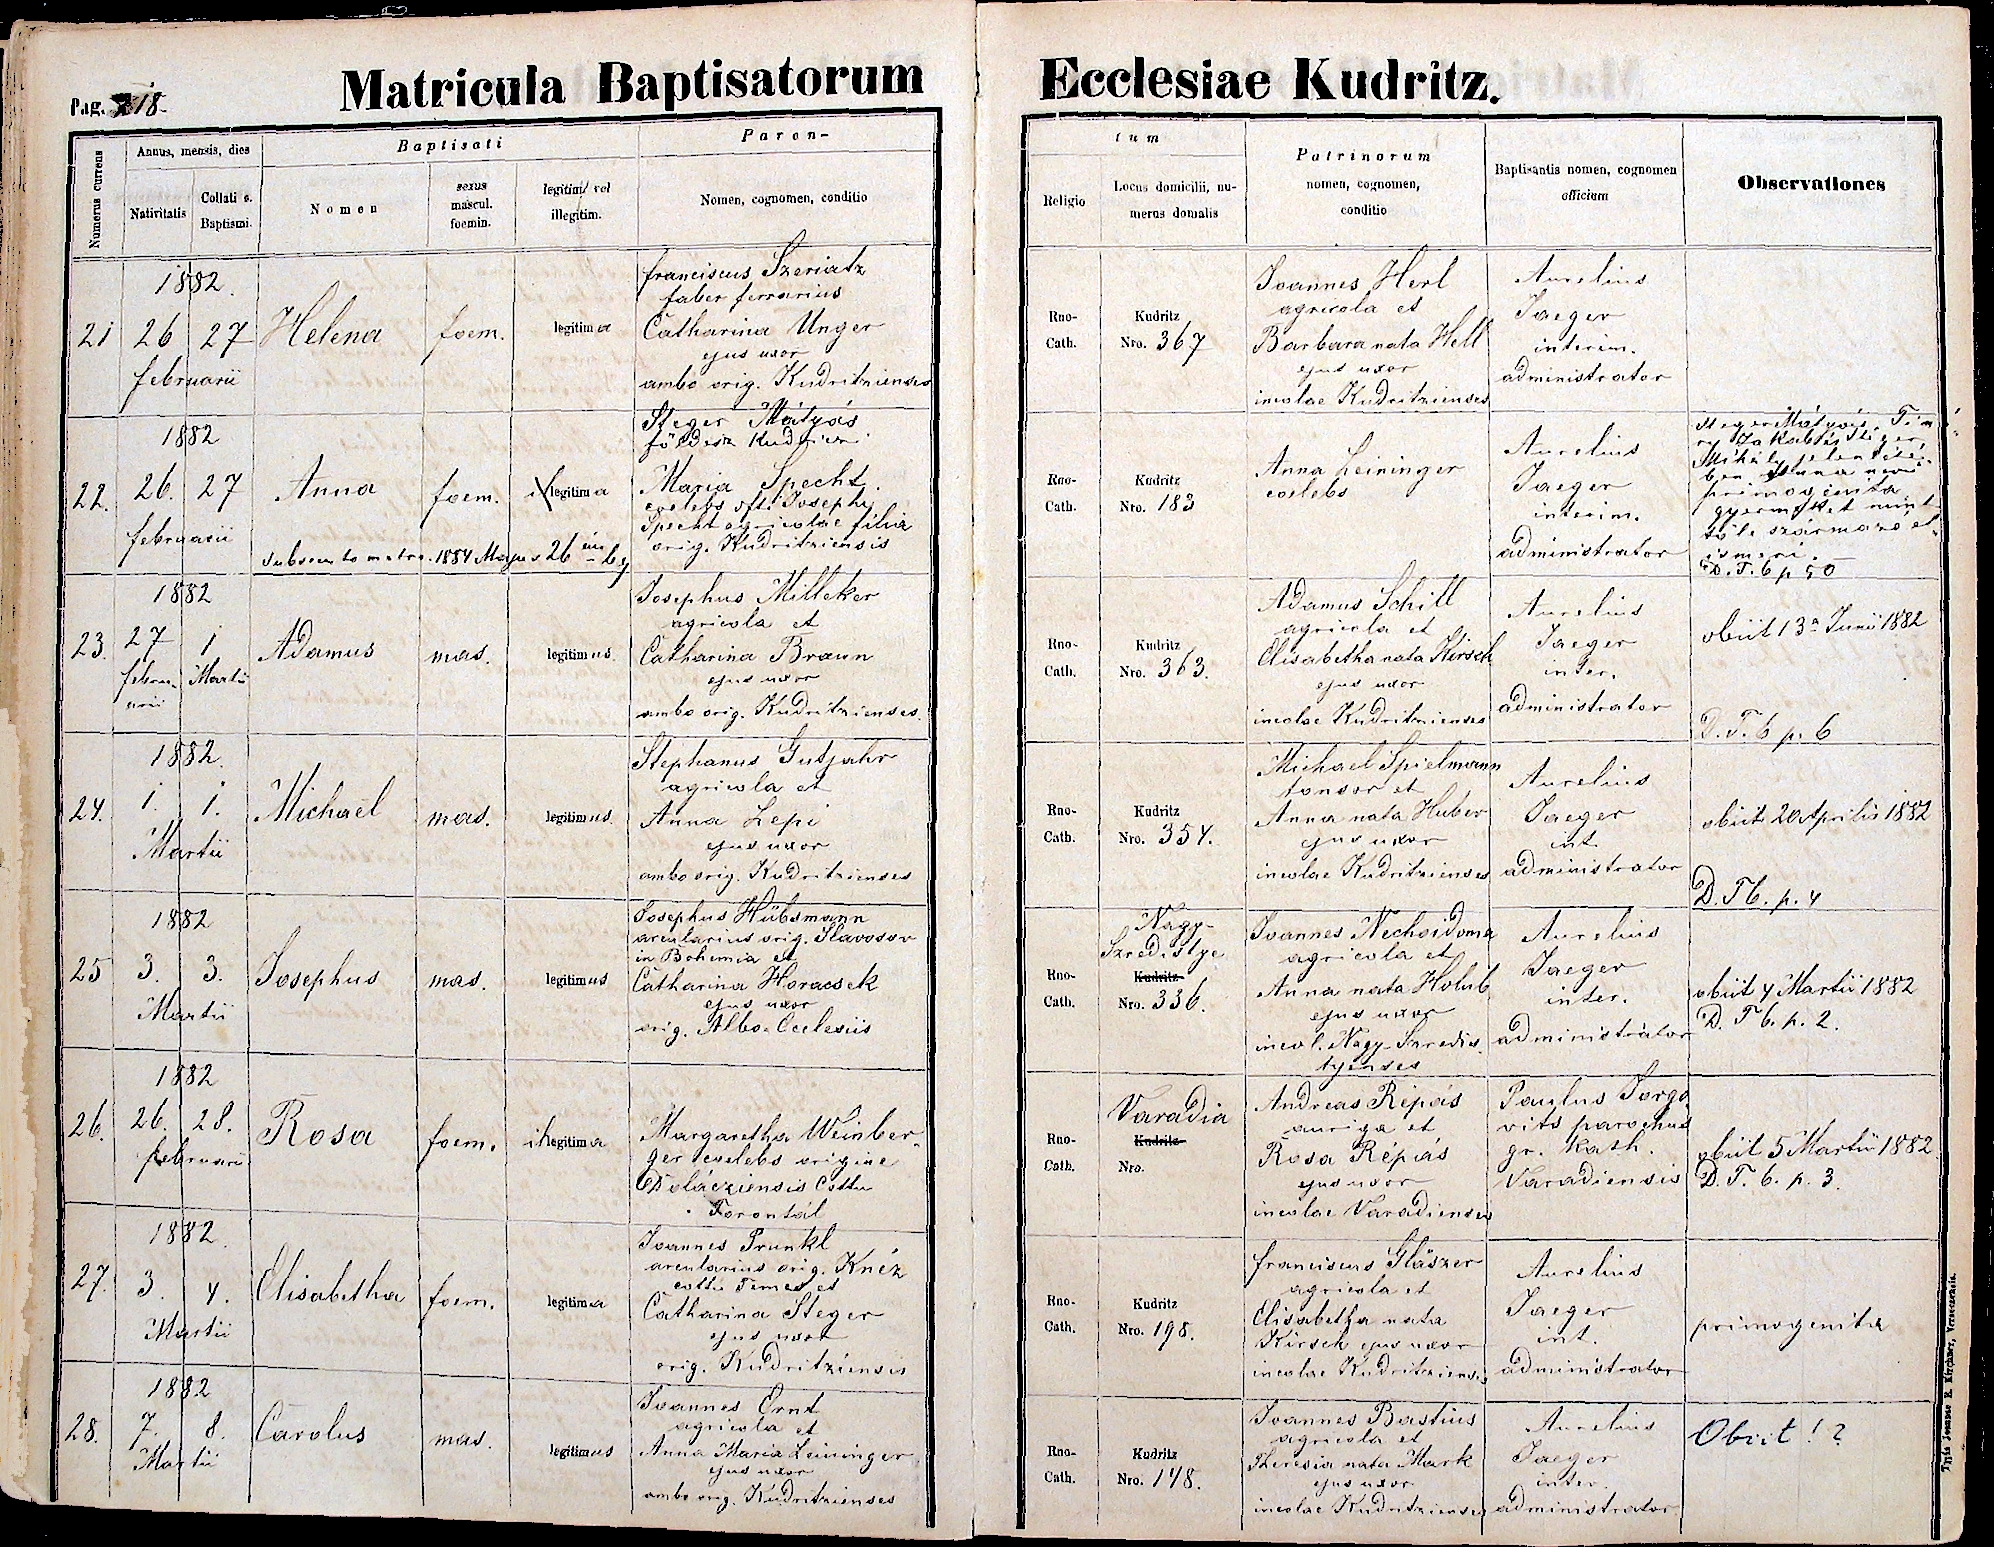 images/church_records/BIRTHS/1884-1899B/1899/218